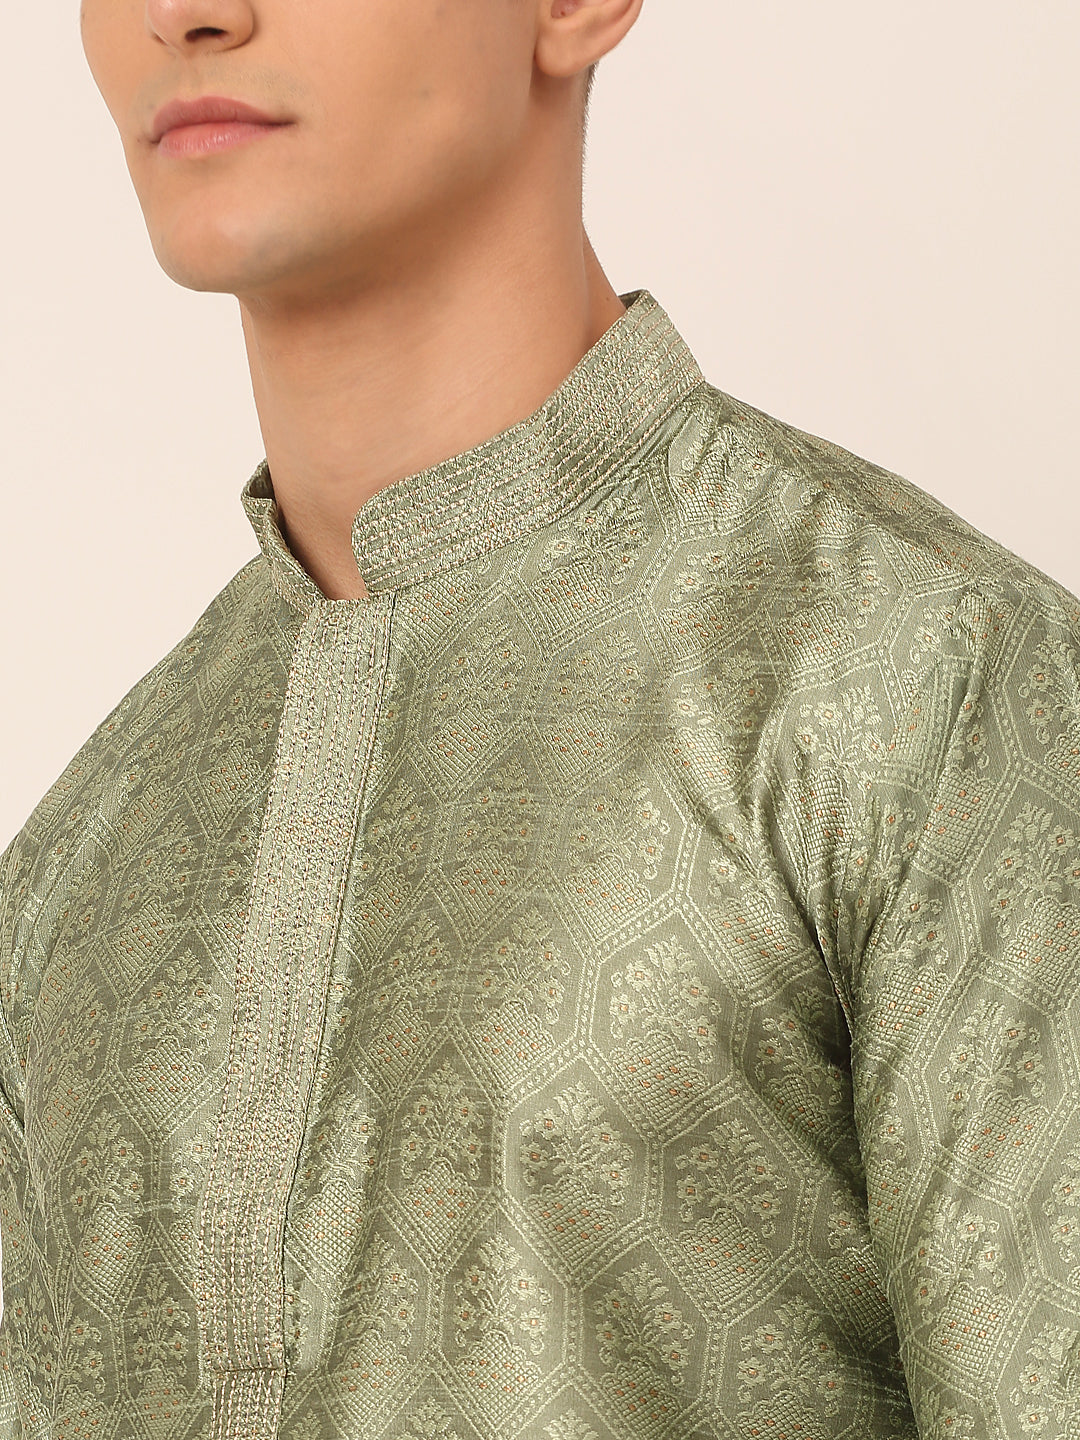 Men's Silk Blend Collar Embroidered Kurta Only ( Ko 662 Pista ) - Virat Fashions